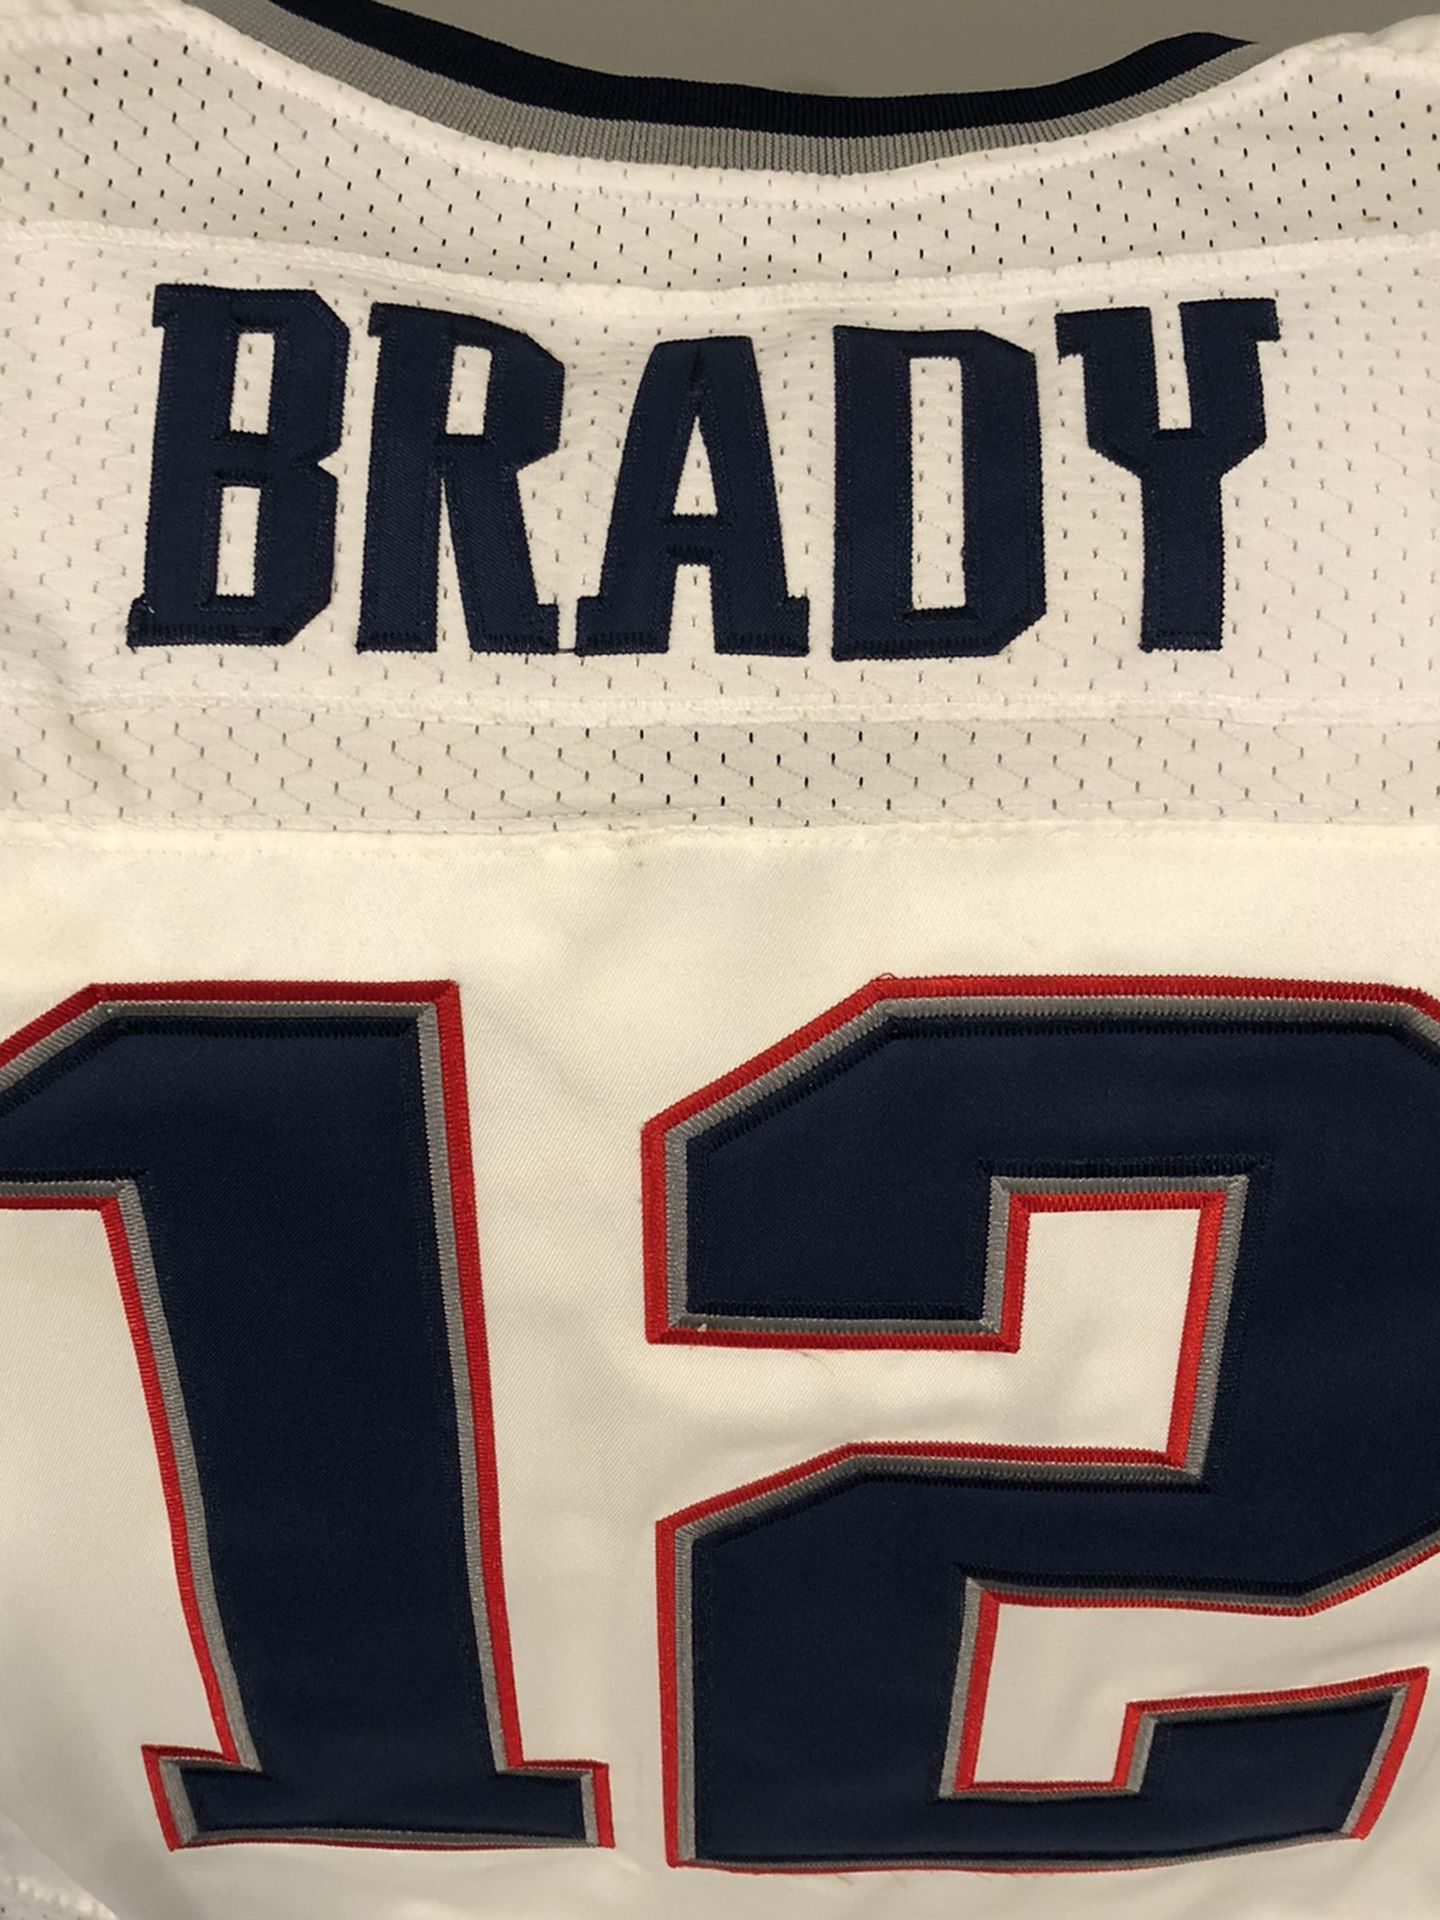 Tom Brady Patriots Jersey!